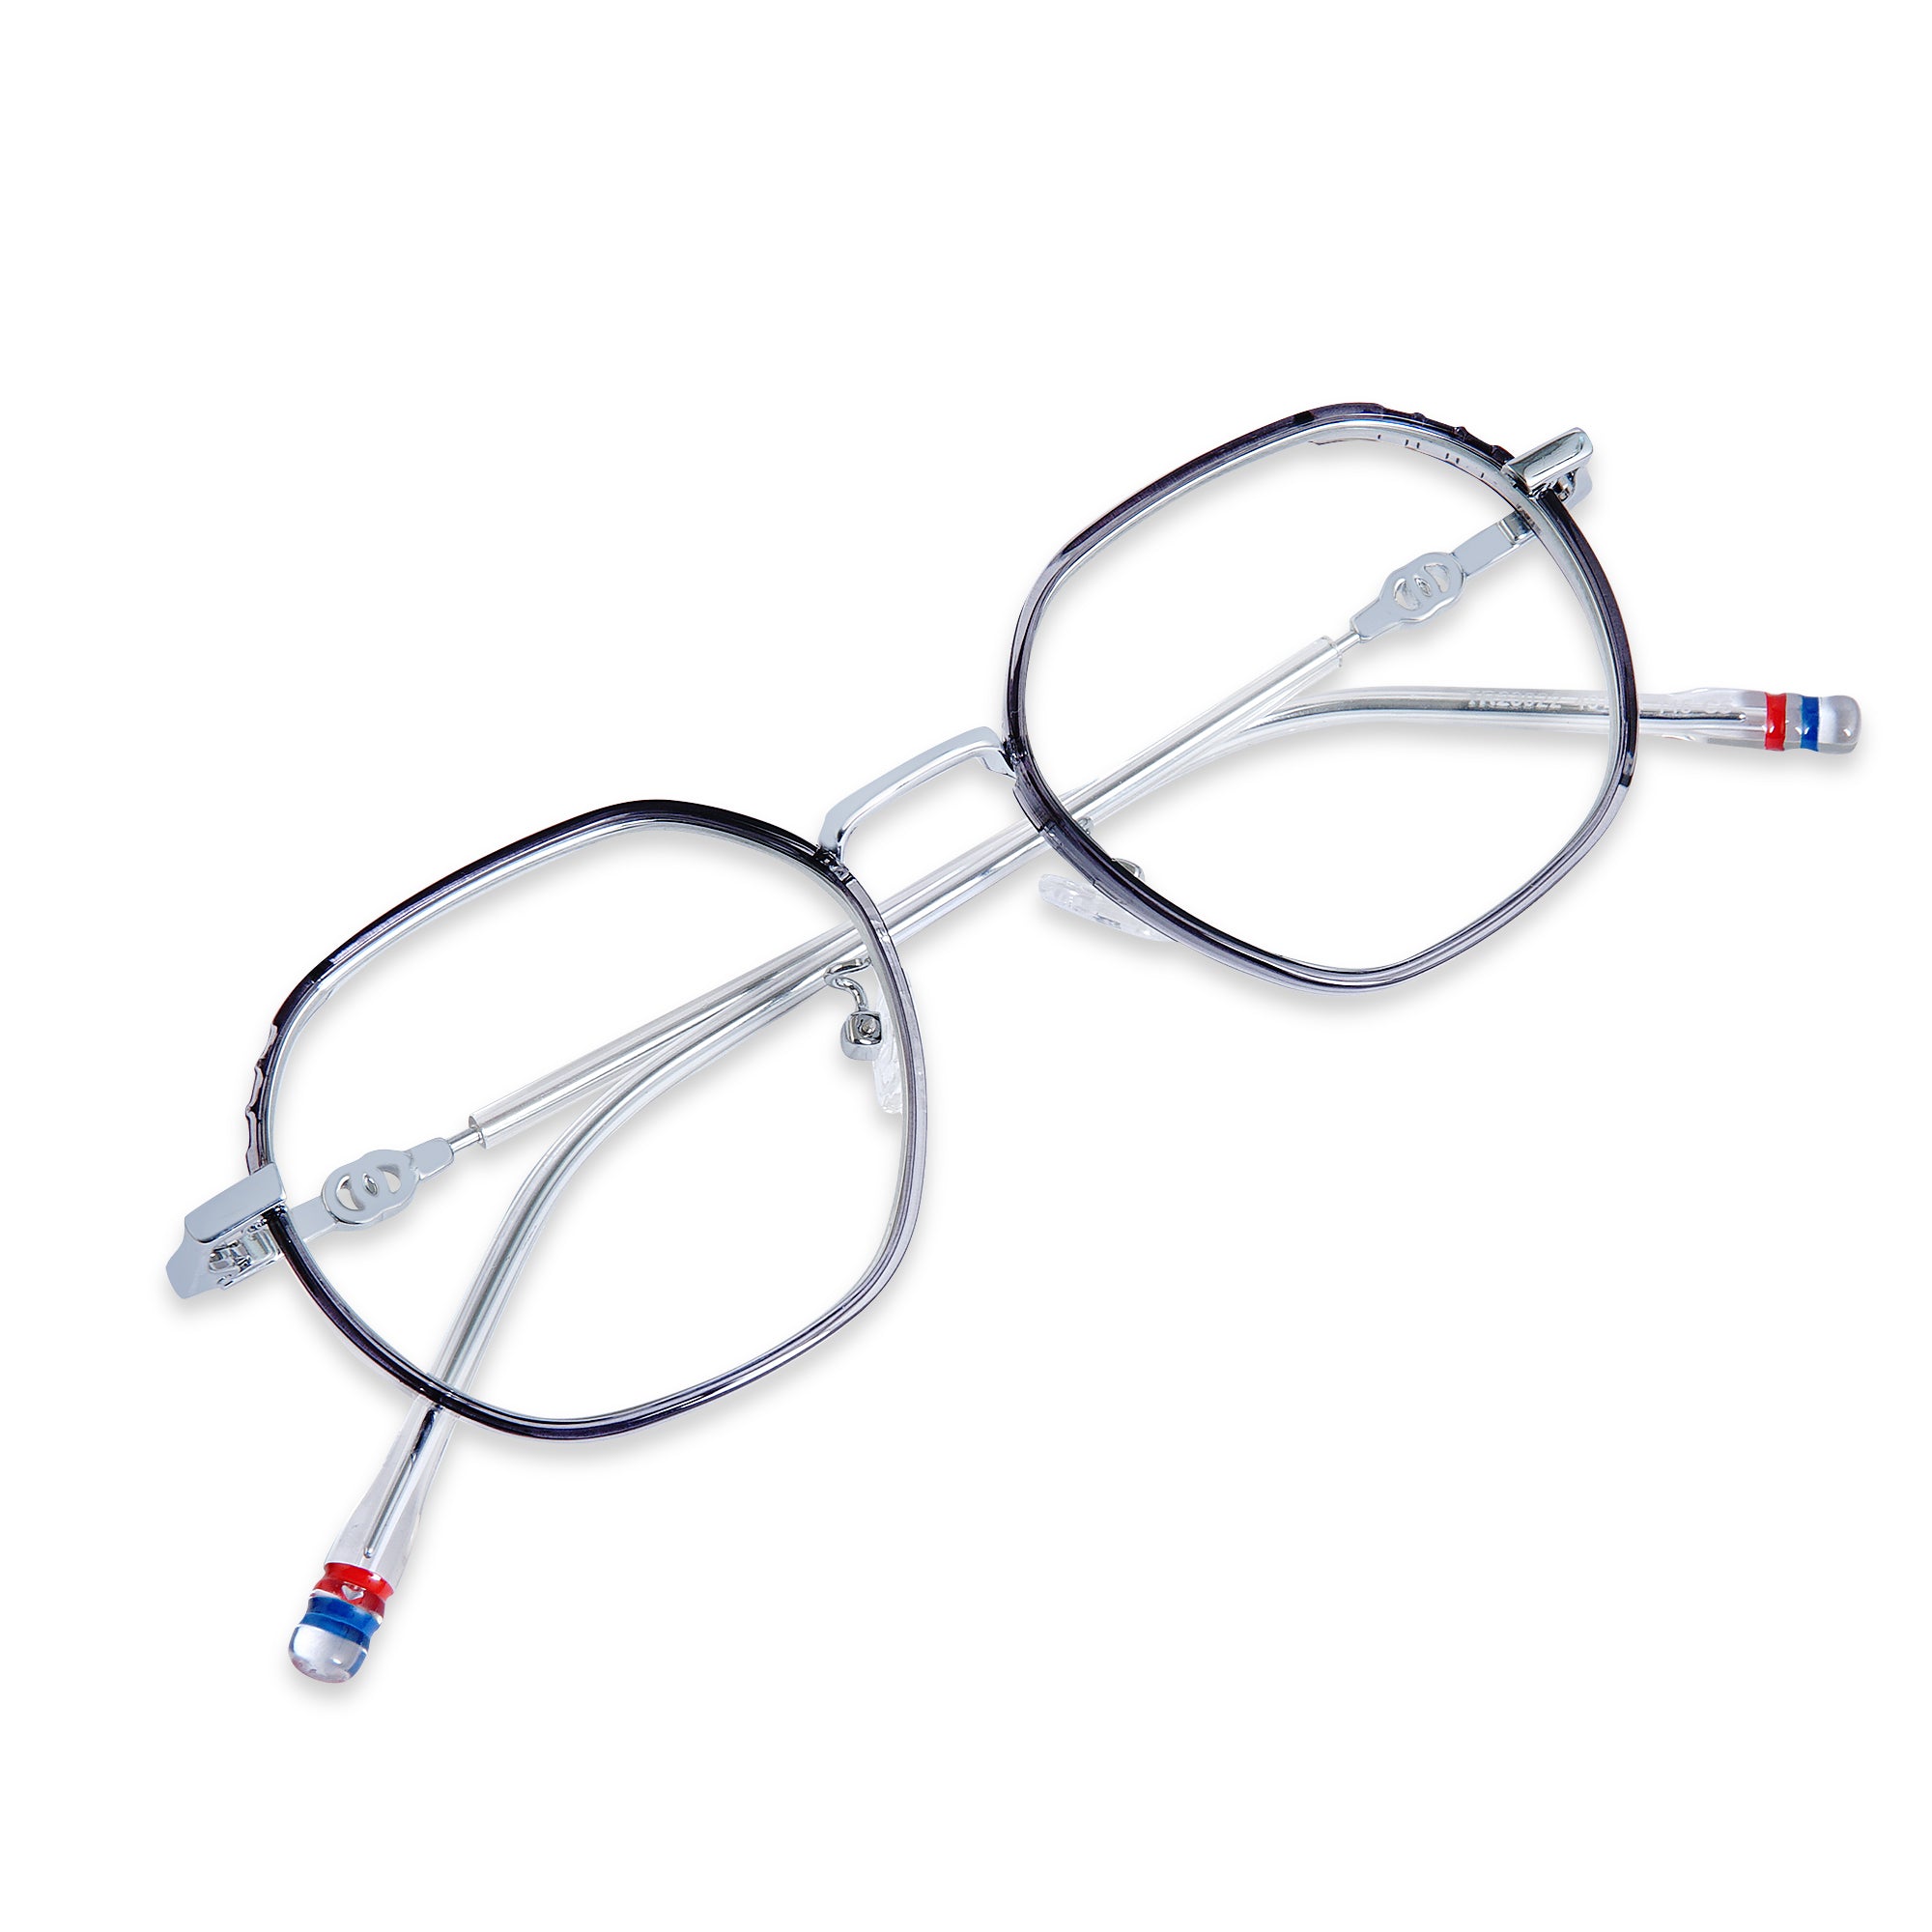 Grey SILVER  Round Titanium Eyeglasses - LTR23022